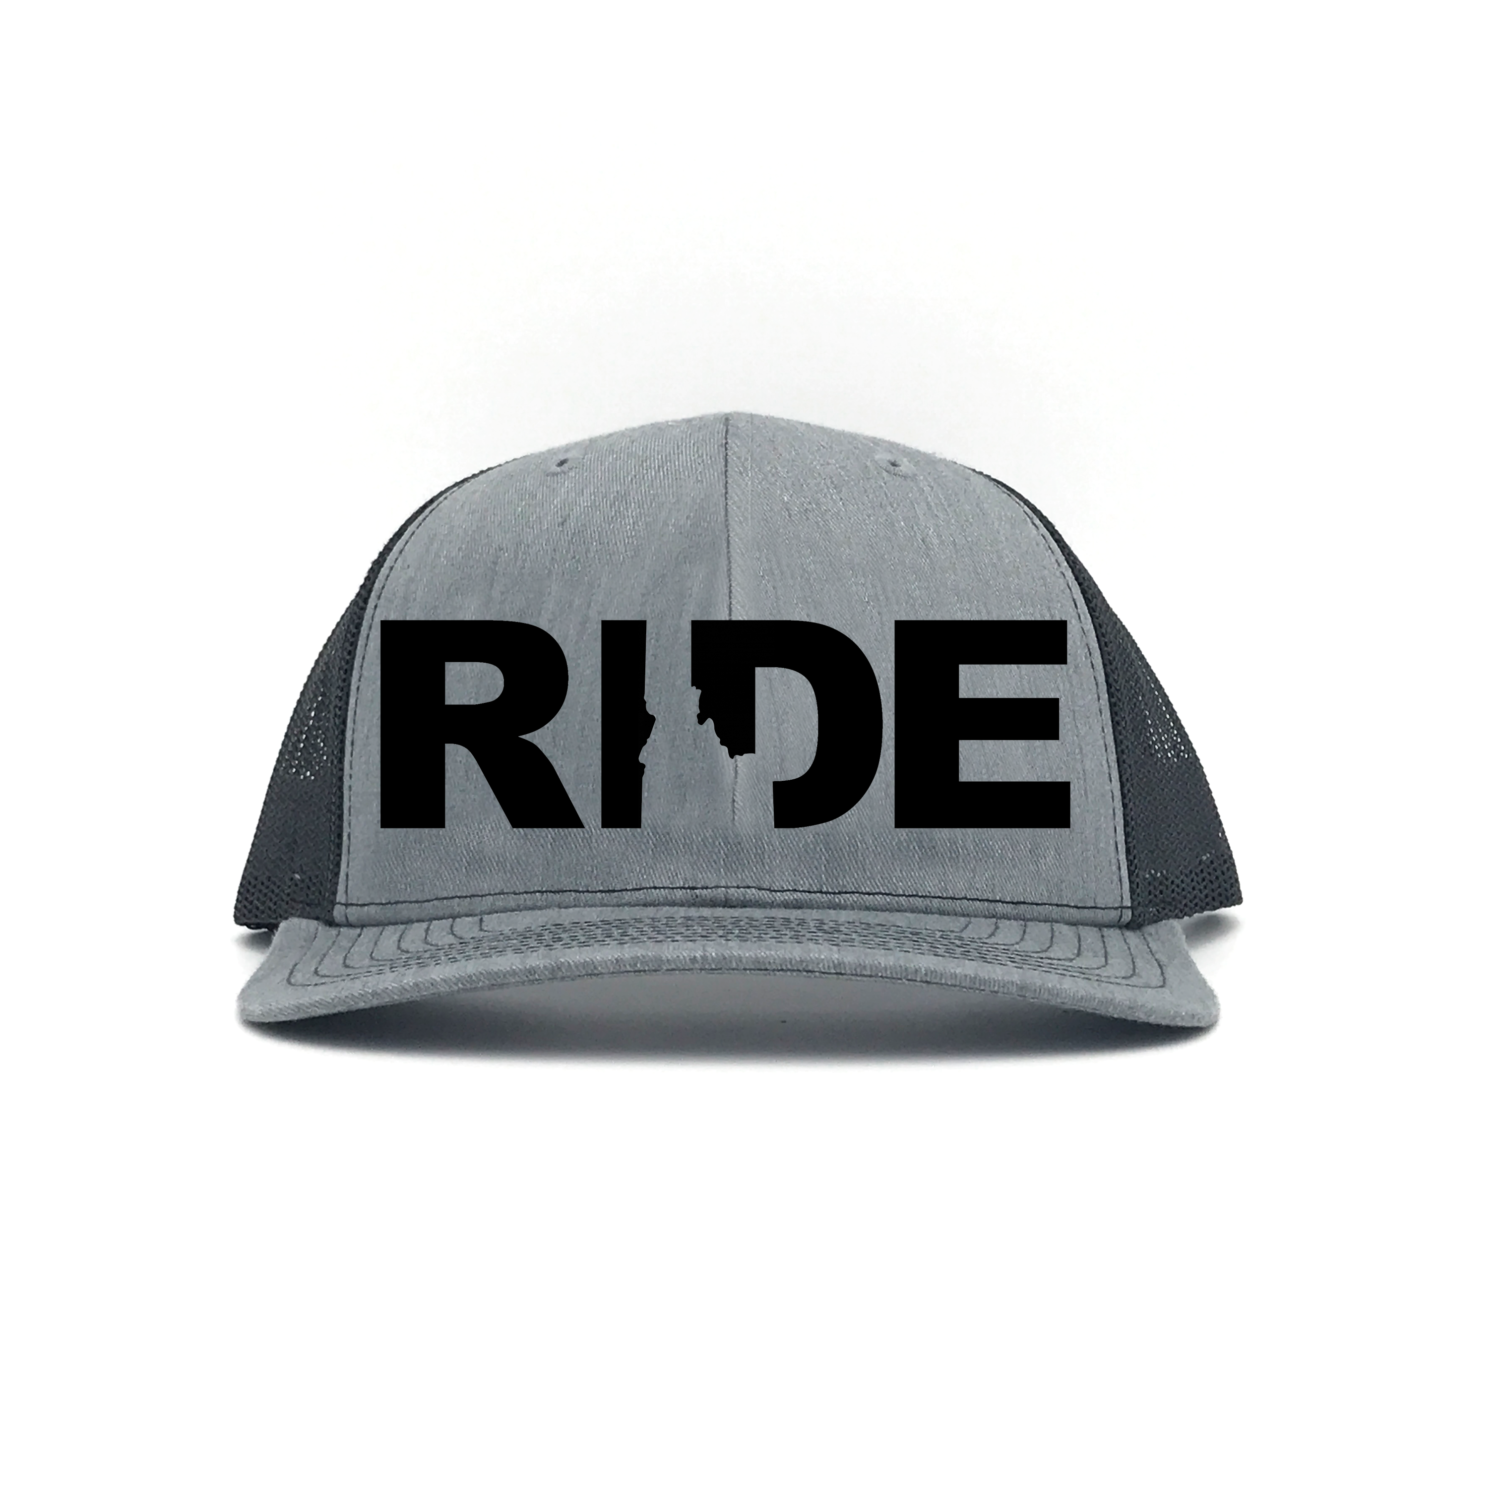 Ride Idaho Classic Embroidered Snapback Trucker Hat Heather Gray/Black